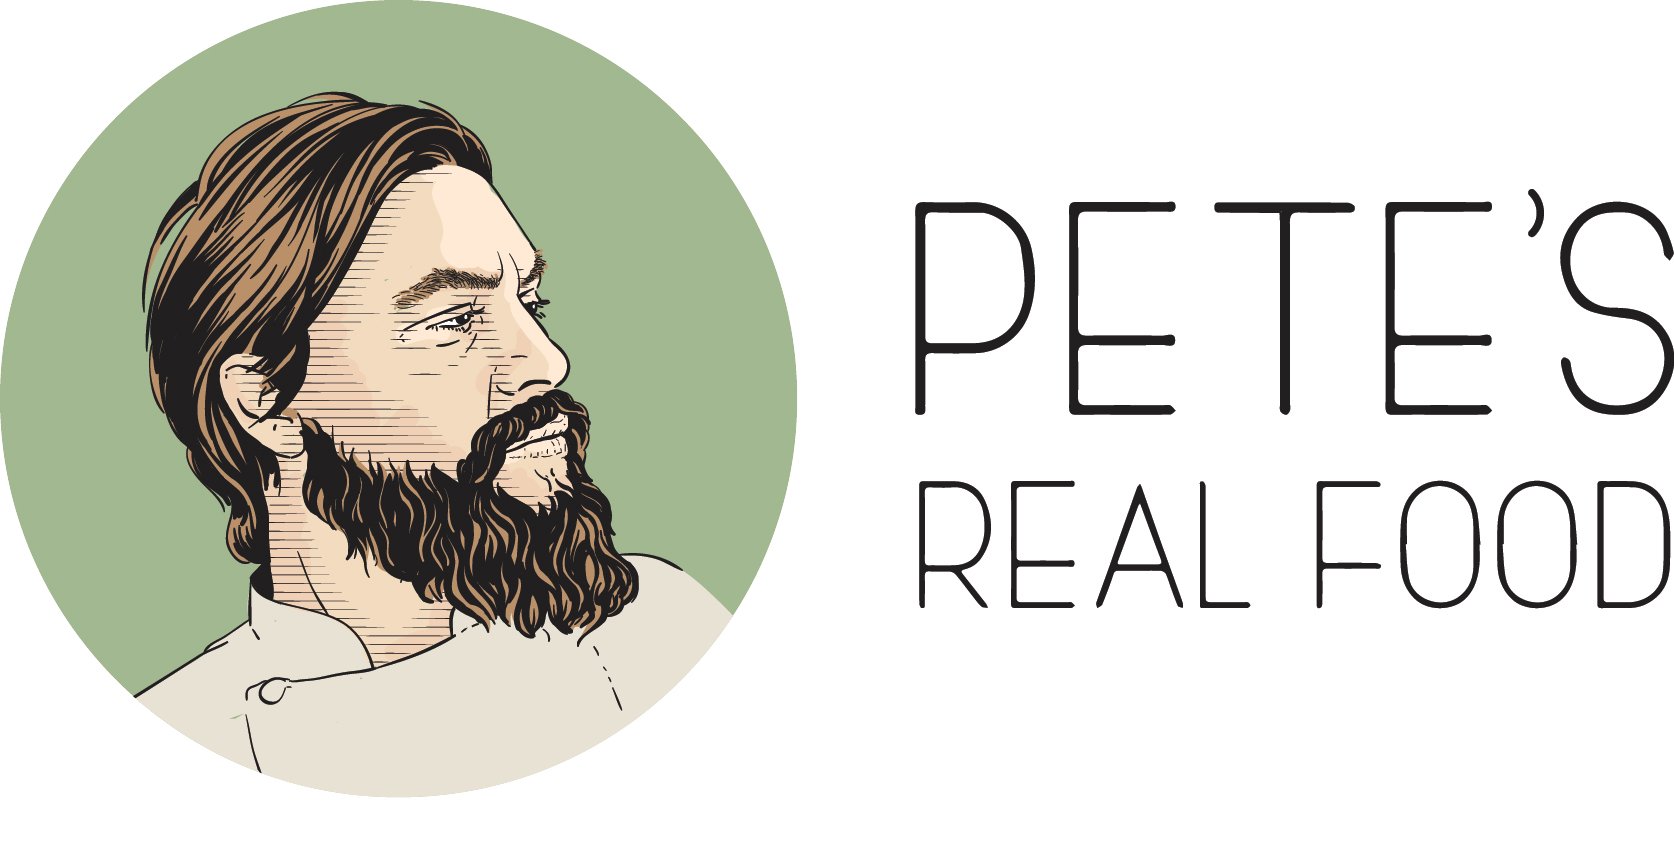 Pete's Real Food logo